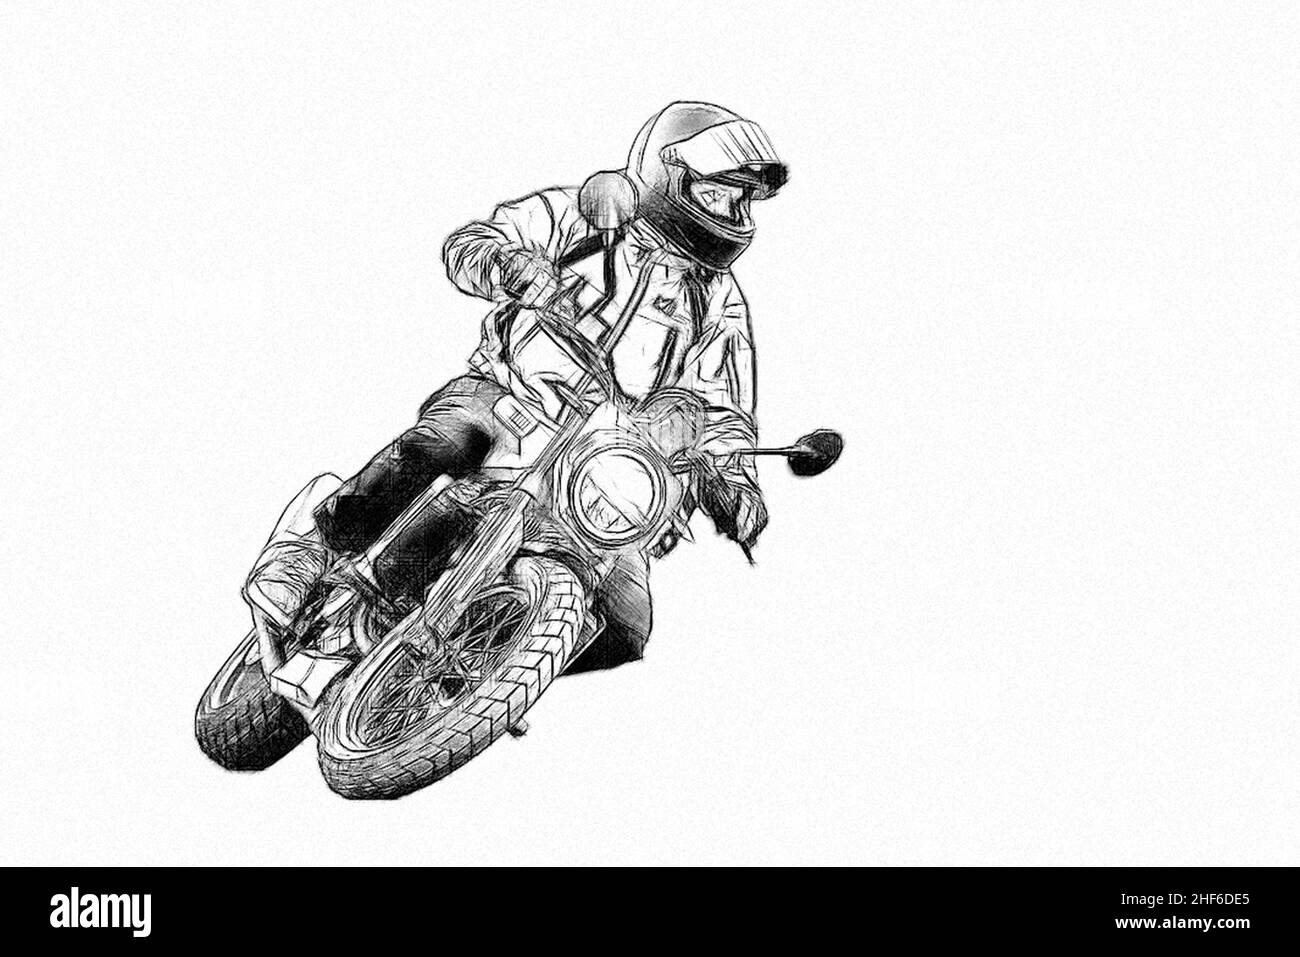 Man Riding Offroad Motocross Motocycle Sketch: ilustrações stock 1119171005